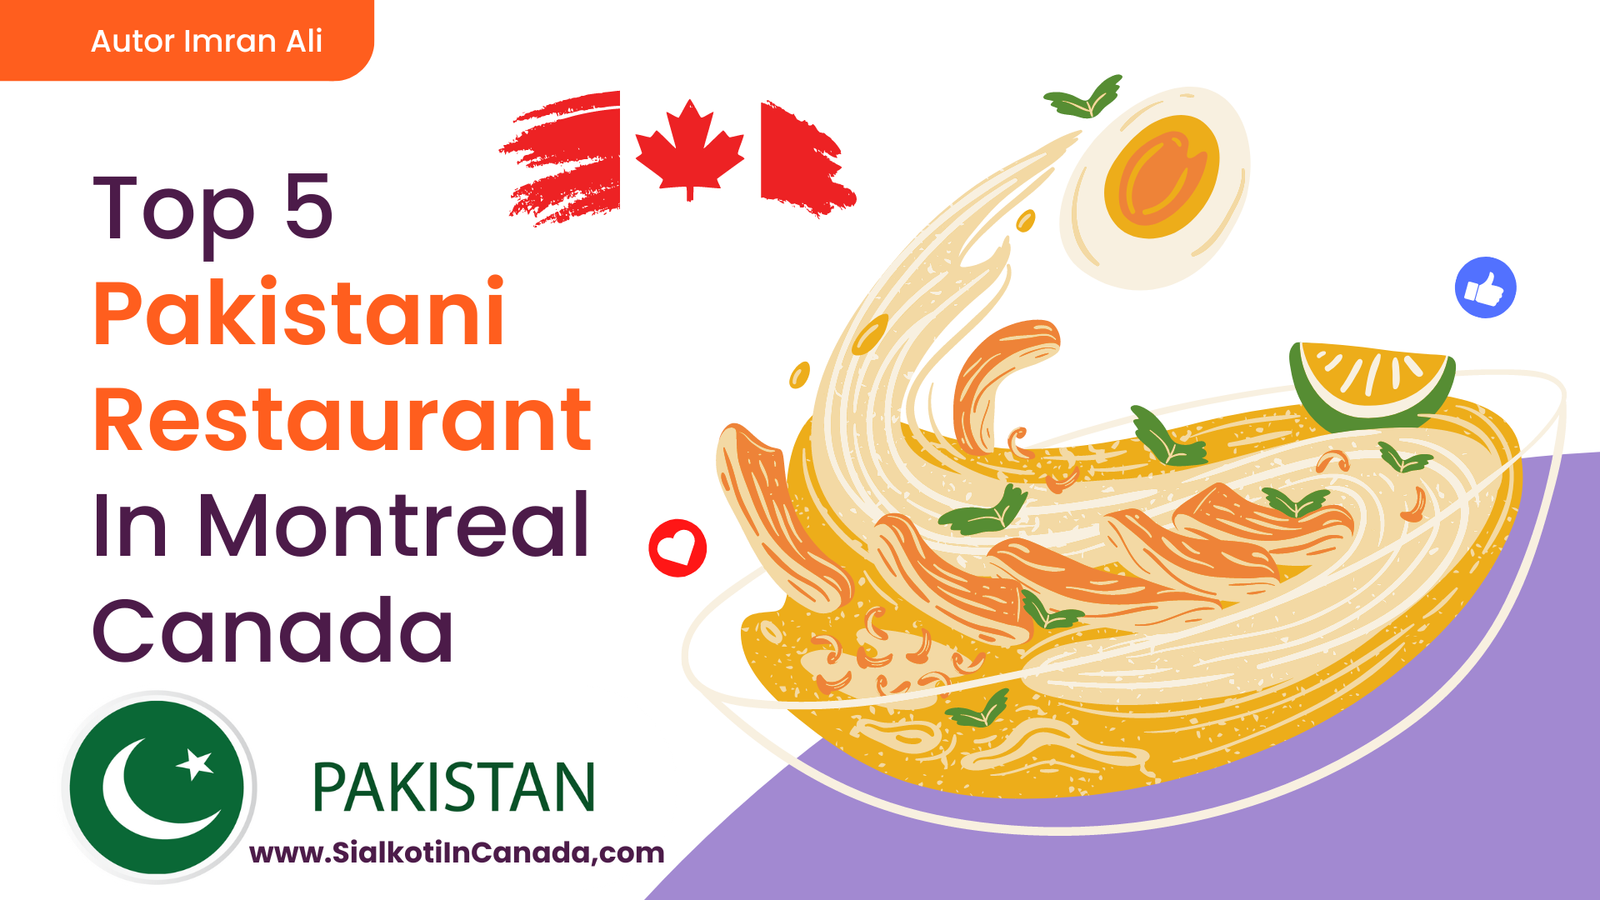 Top 5 Pakistani restaurant in Montreal Canada